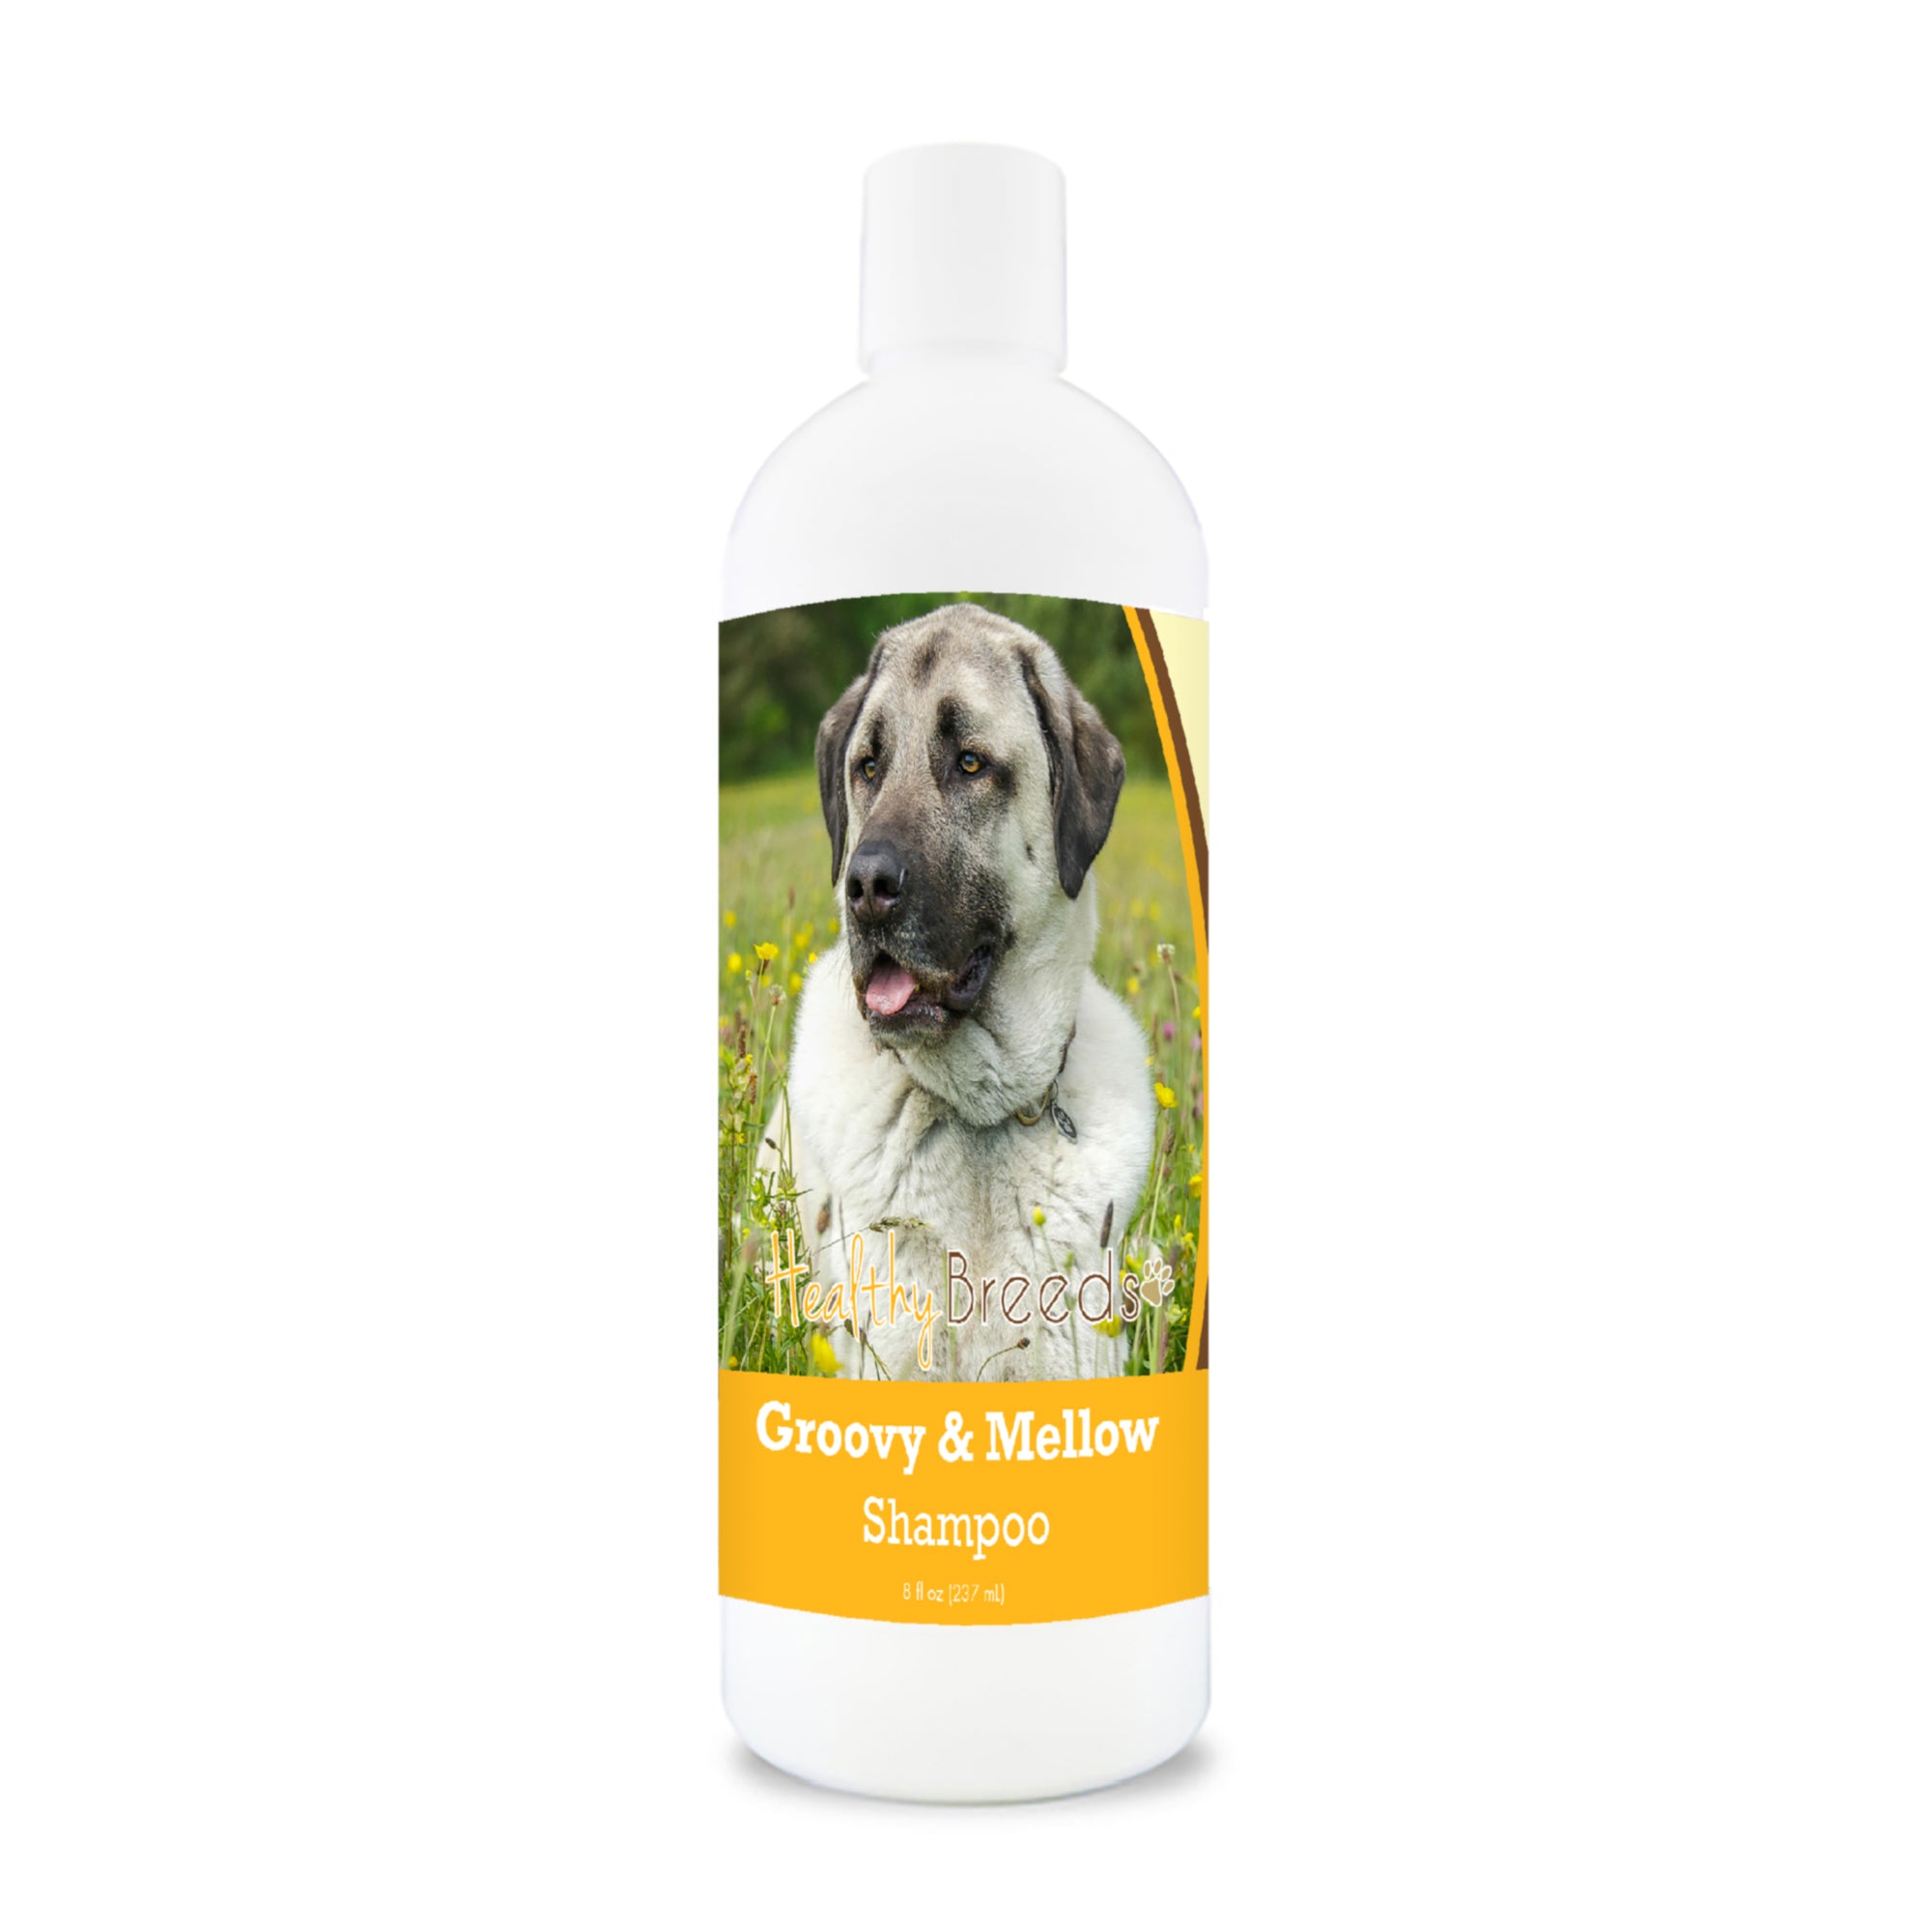 Anatolian Shepherd Dog Groovy & Mellow Shampoo 8 oz